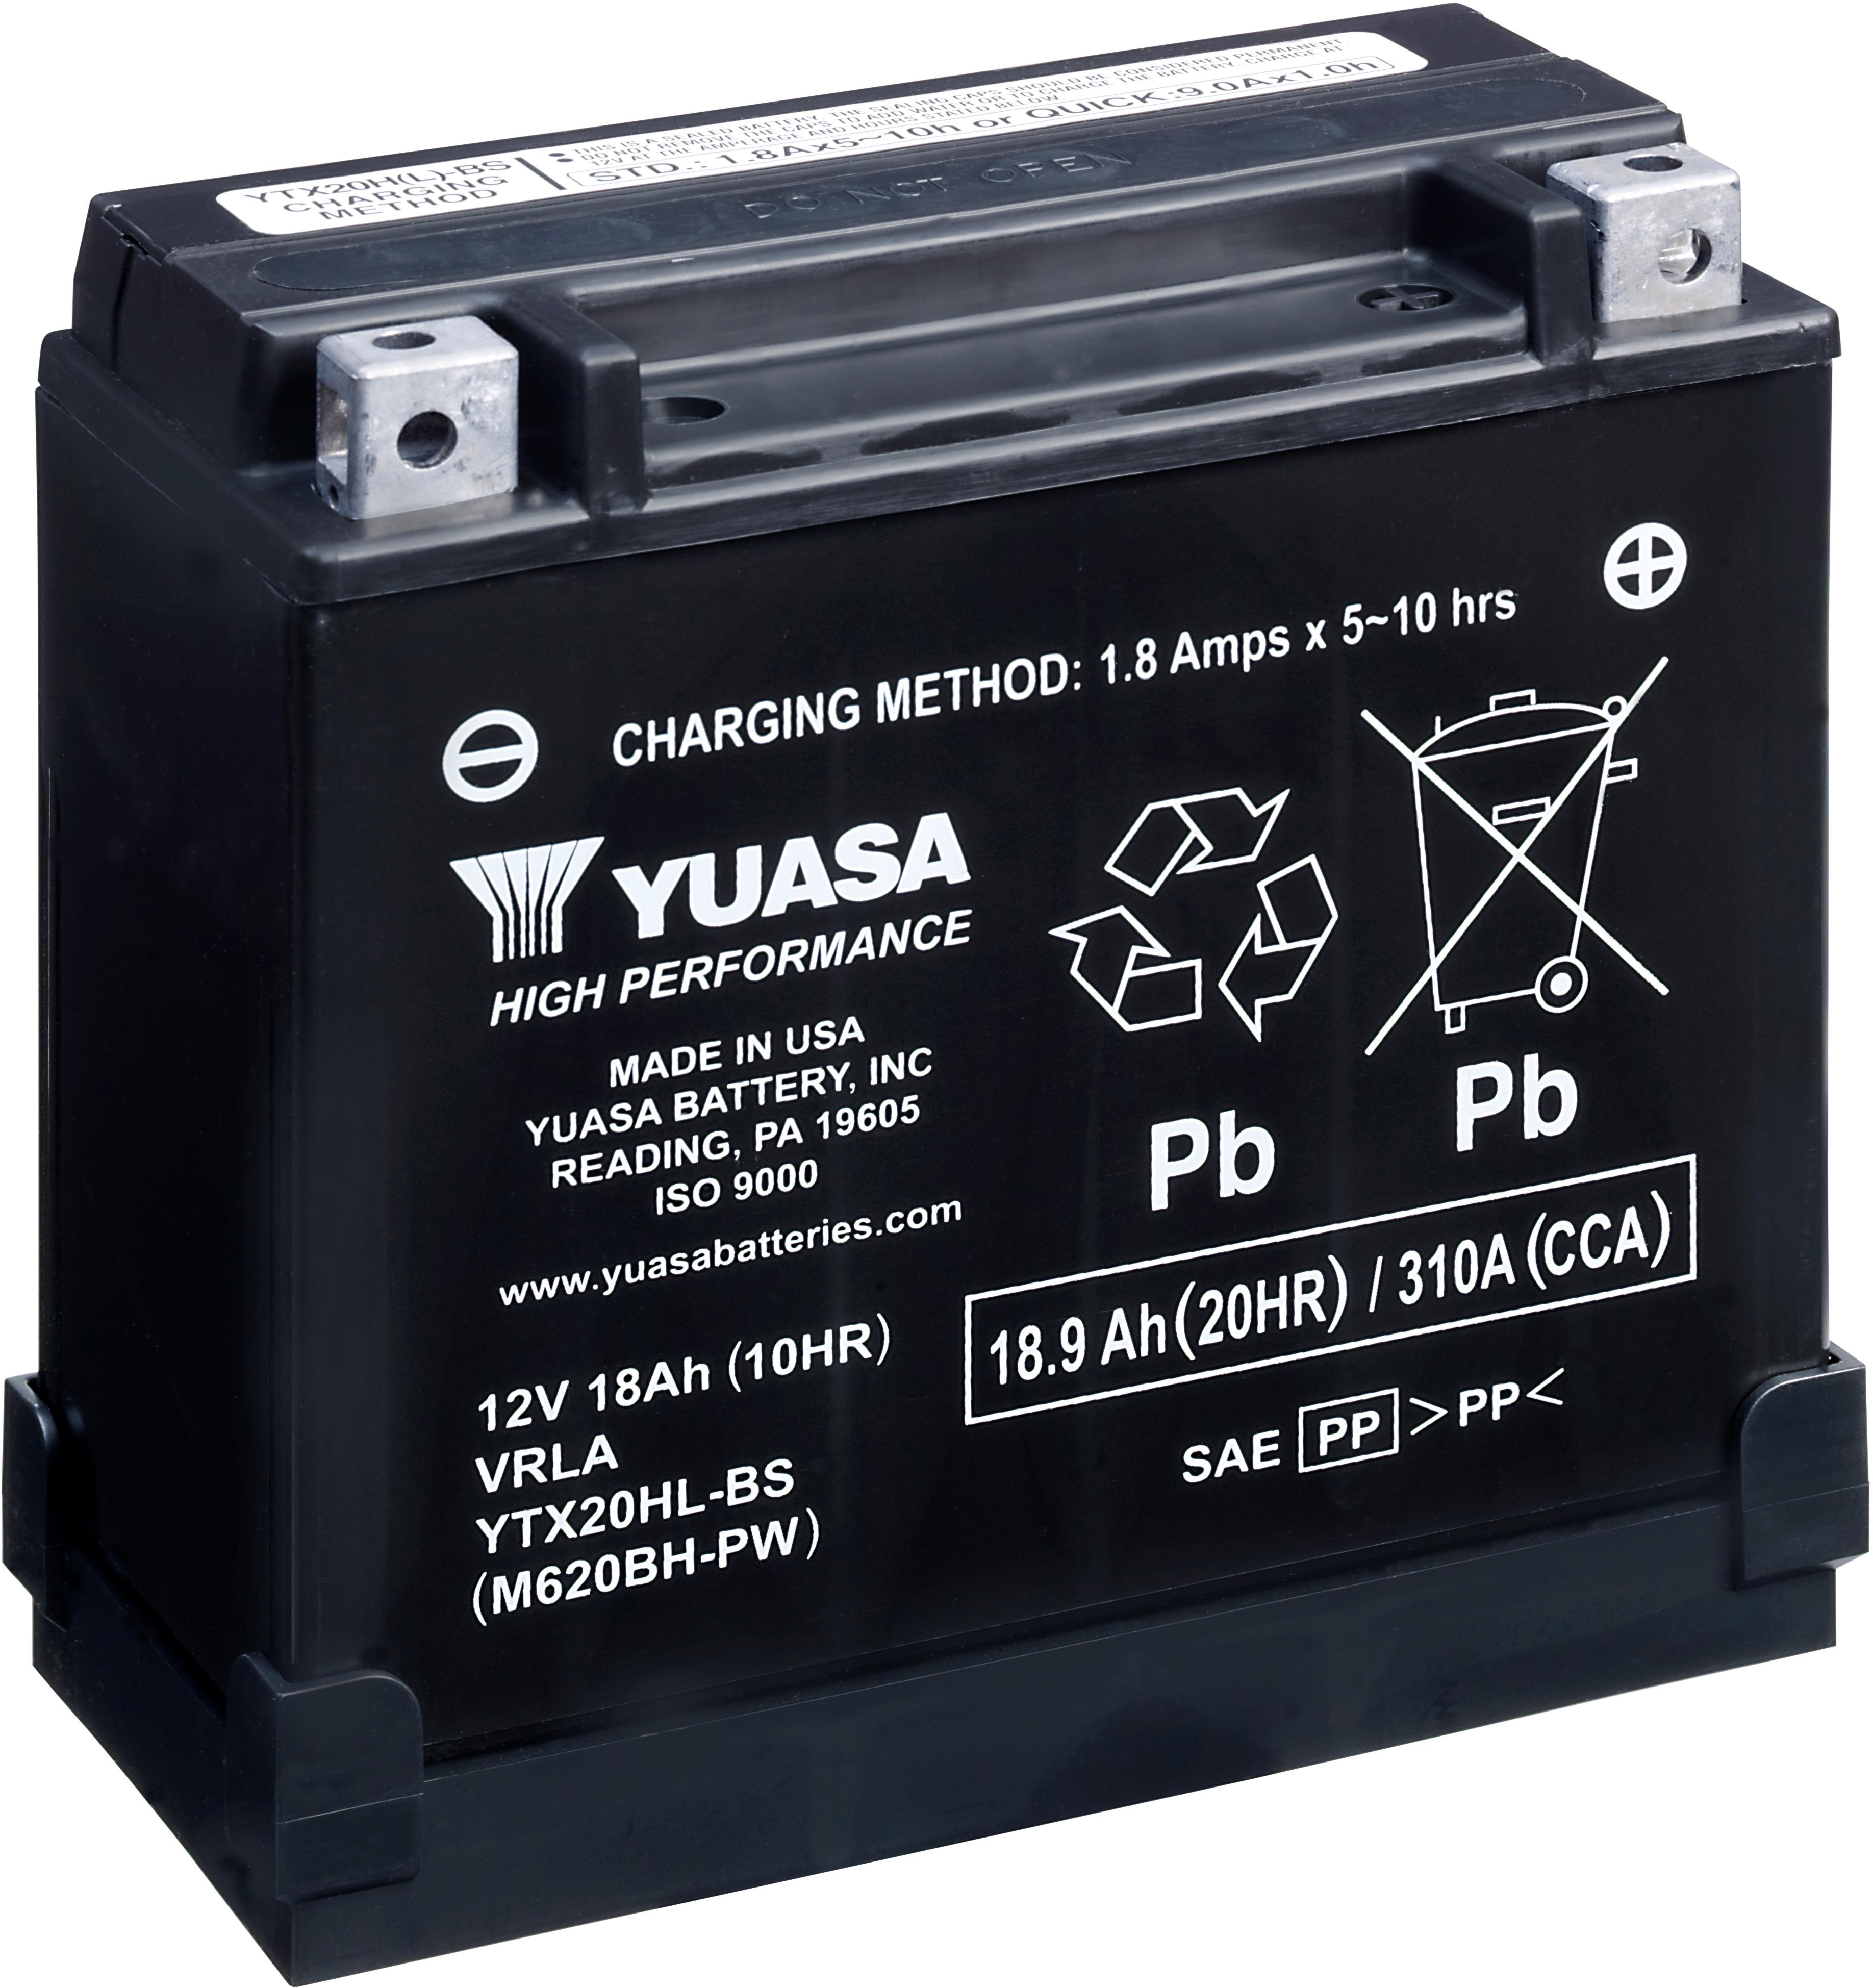 Yuasa Ytx20Hl-Bs High Performance Motorcycle Battery